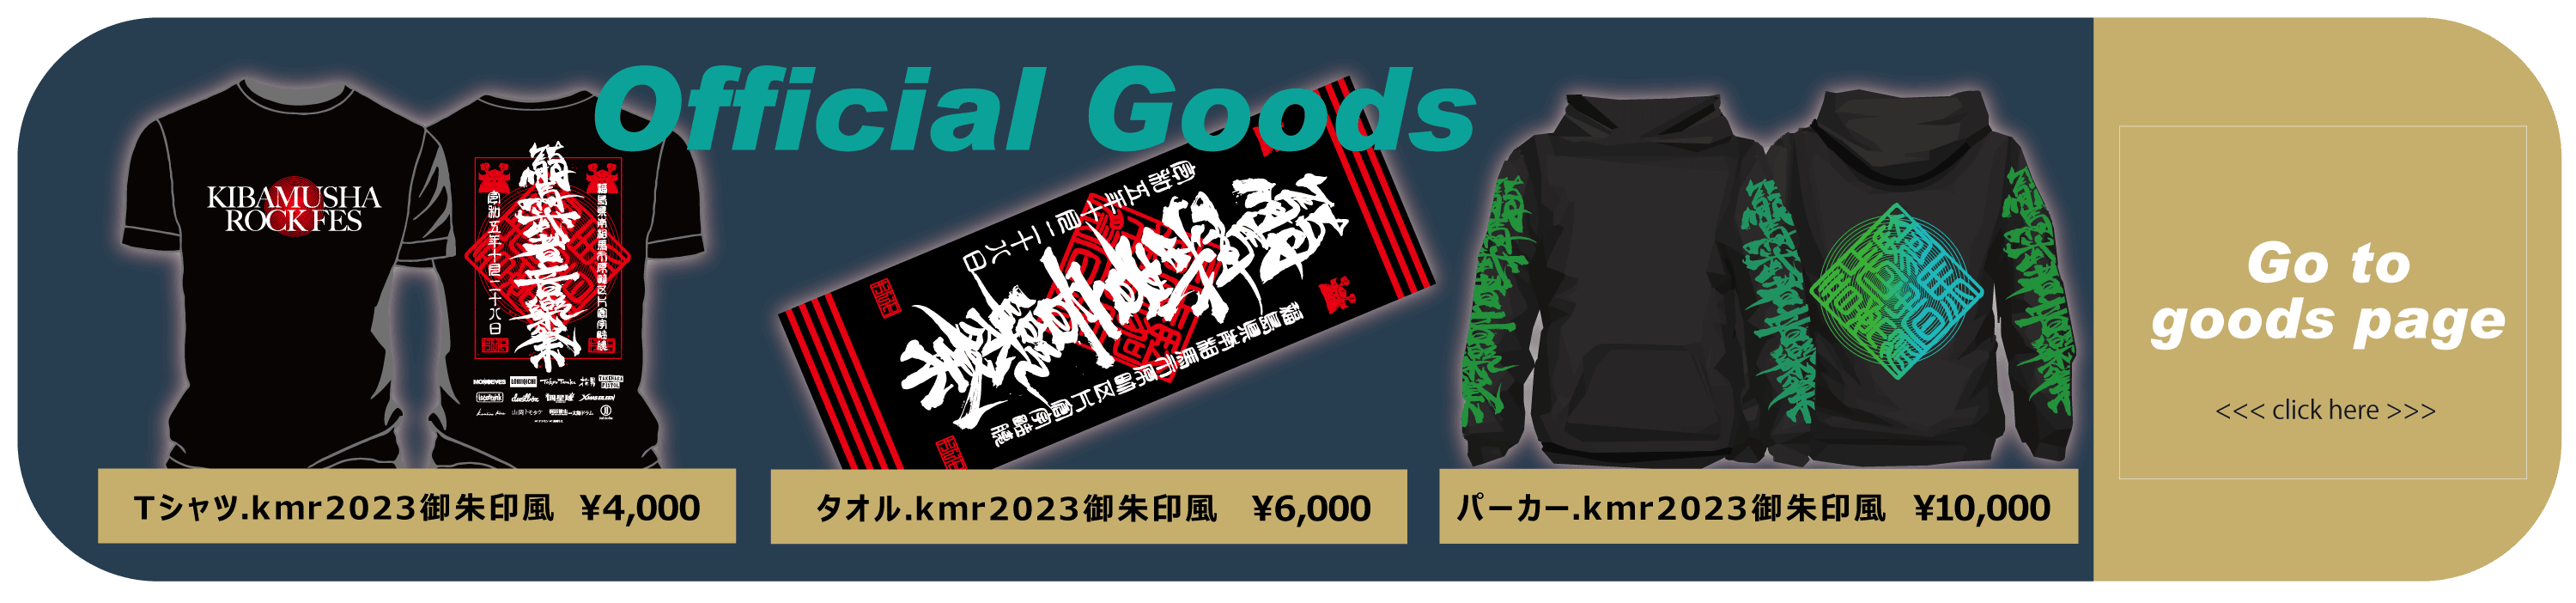 official goods